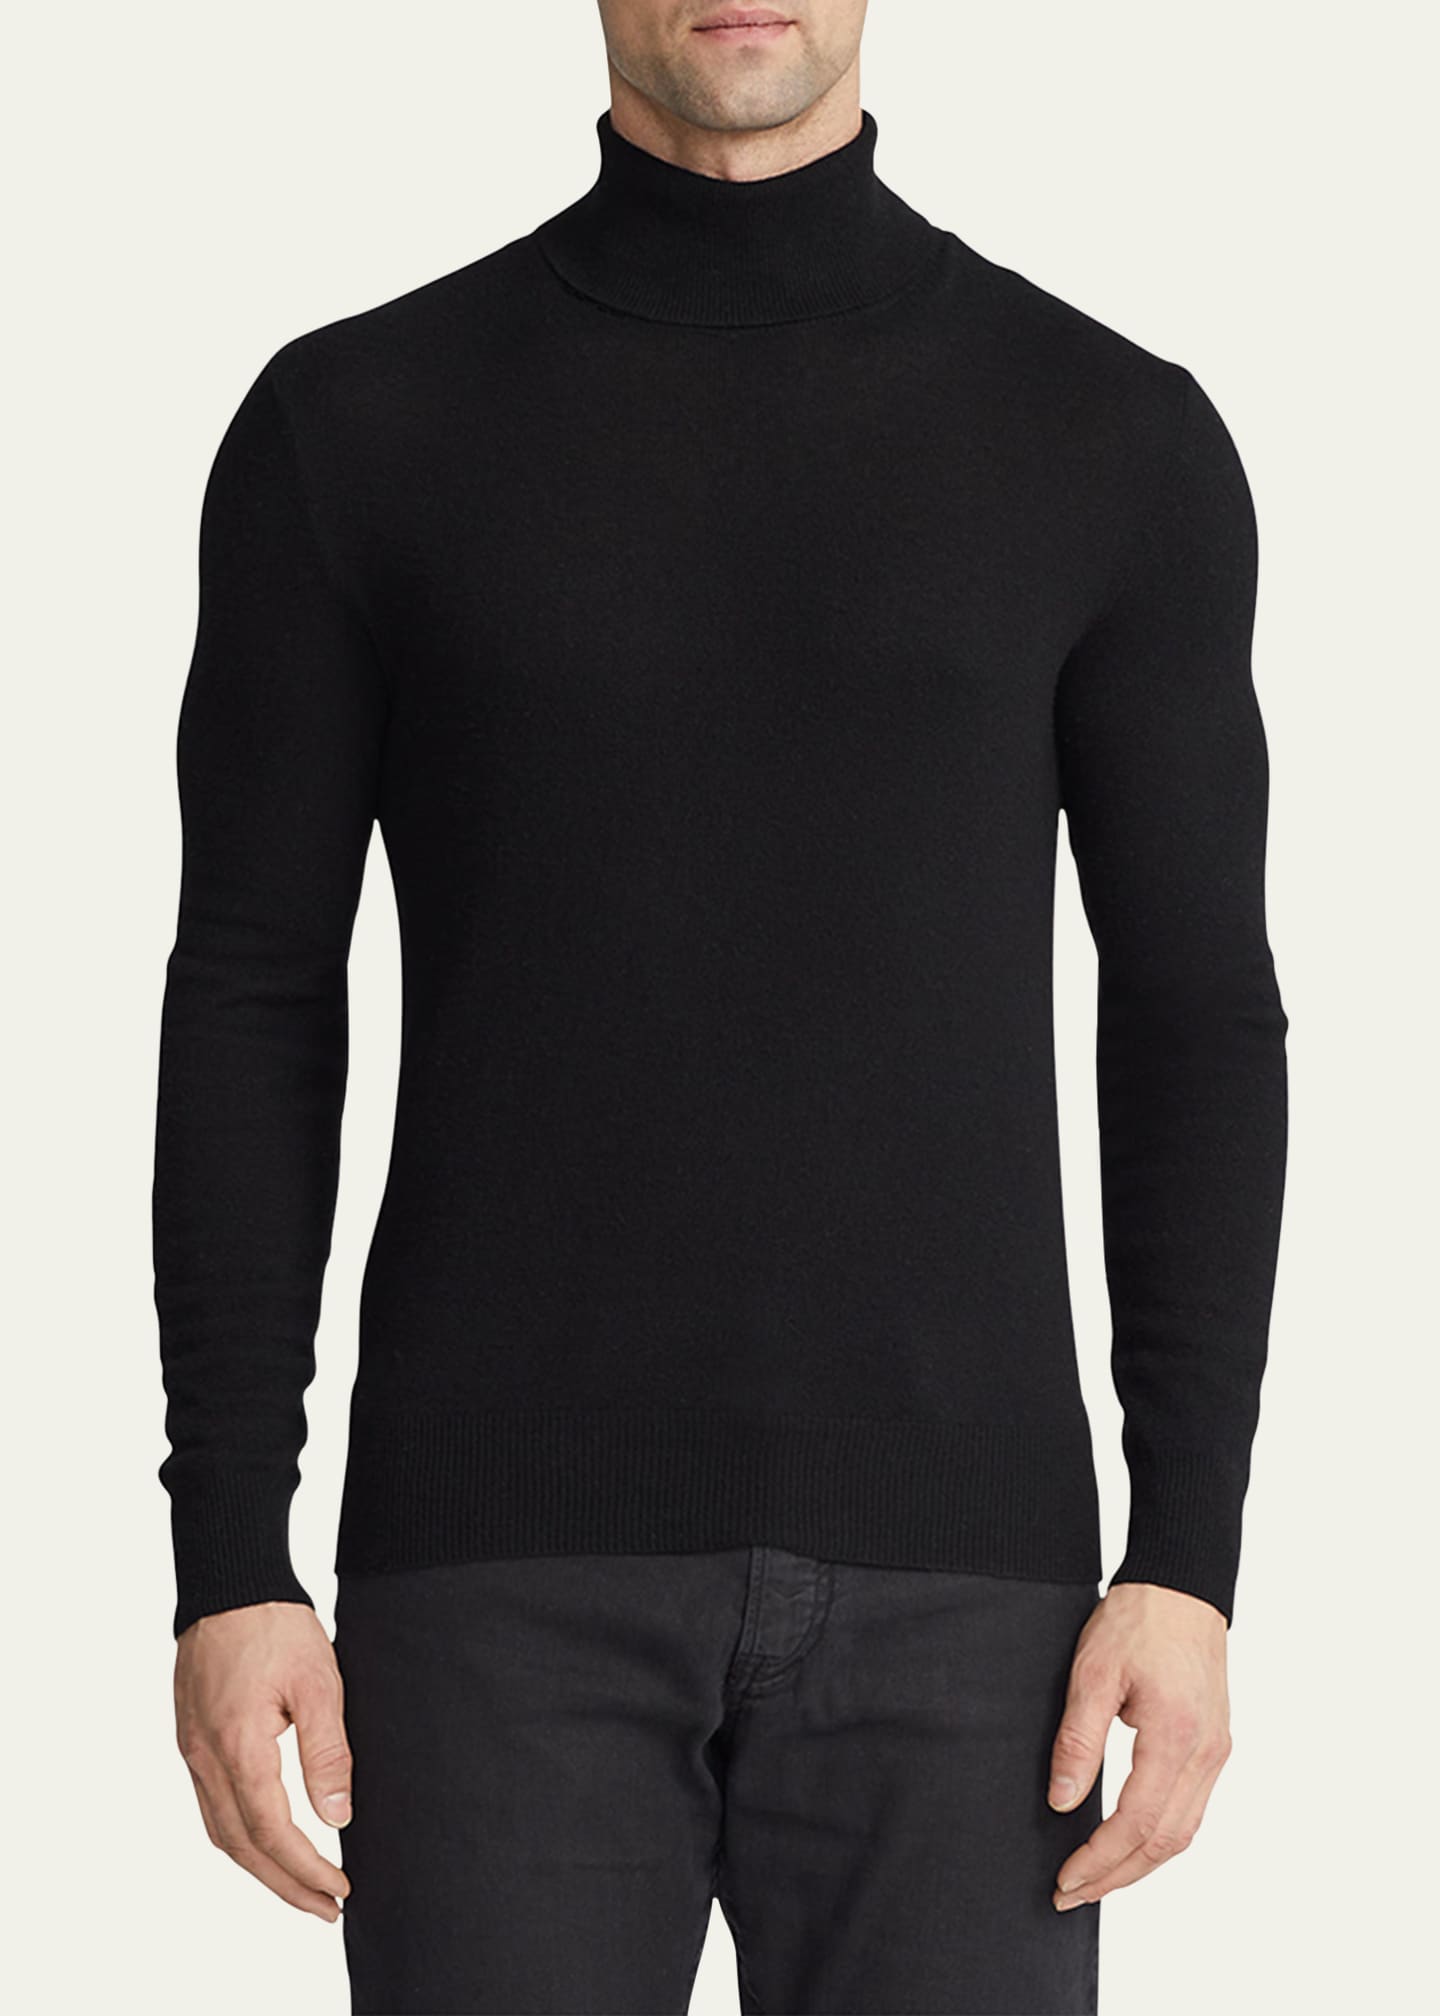 Ralph Lauren Black Cashmere Long Sleeve Turtleneck Sweater M Ralph Lauren